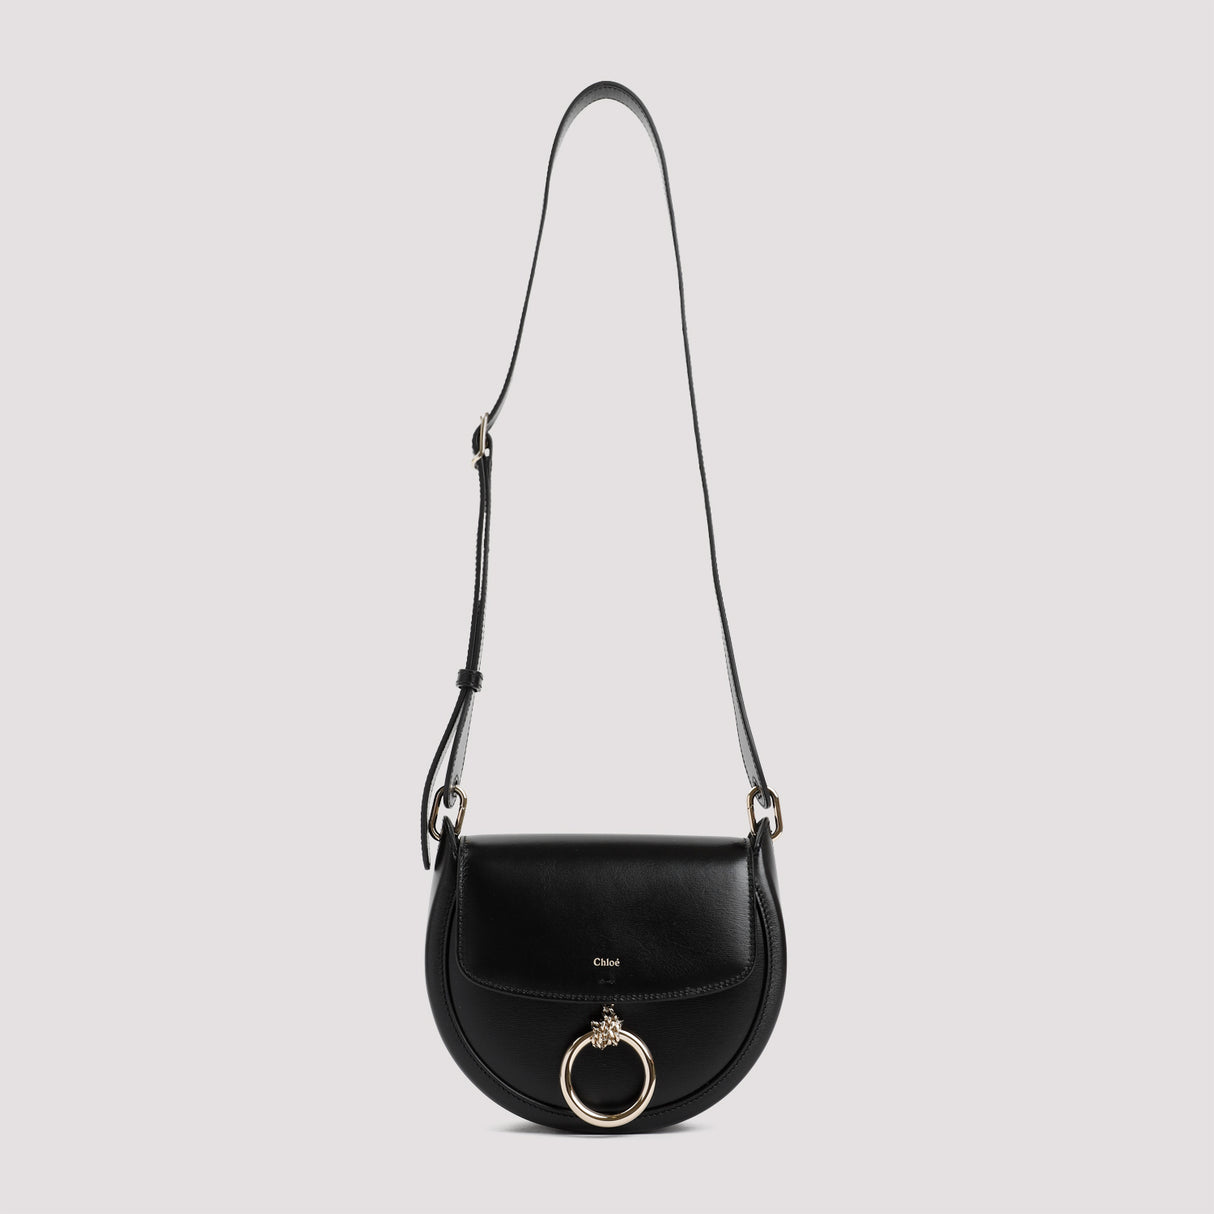 Leather Shoulder Handbag with Magnetic Closure and Metal Detailing